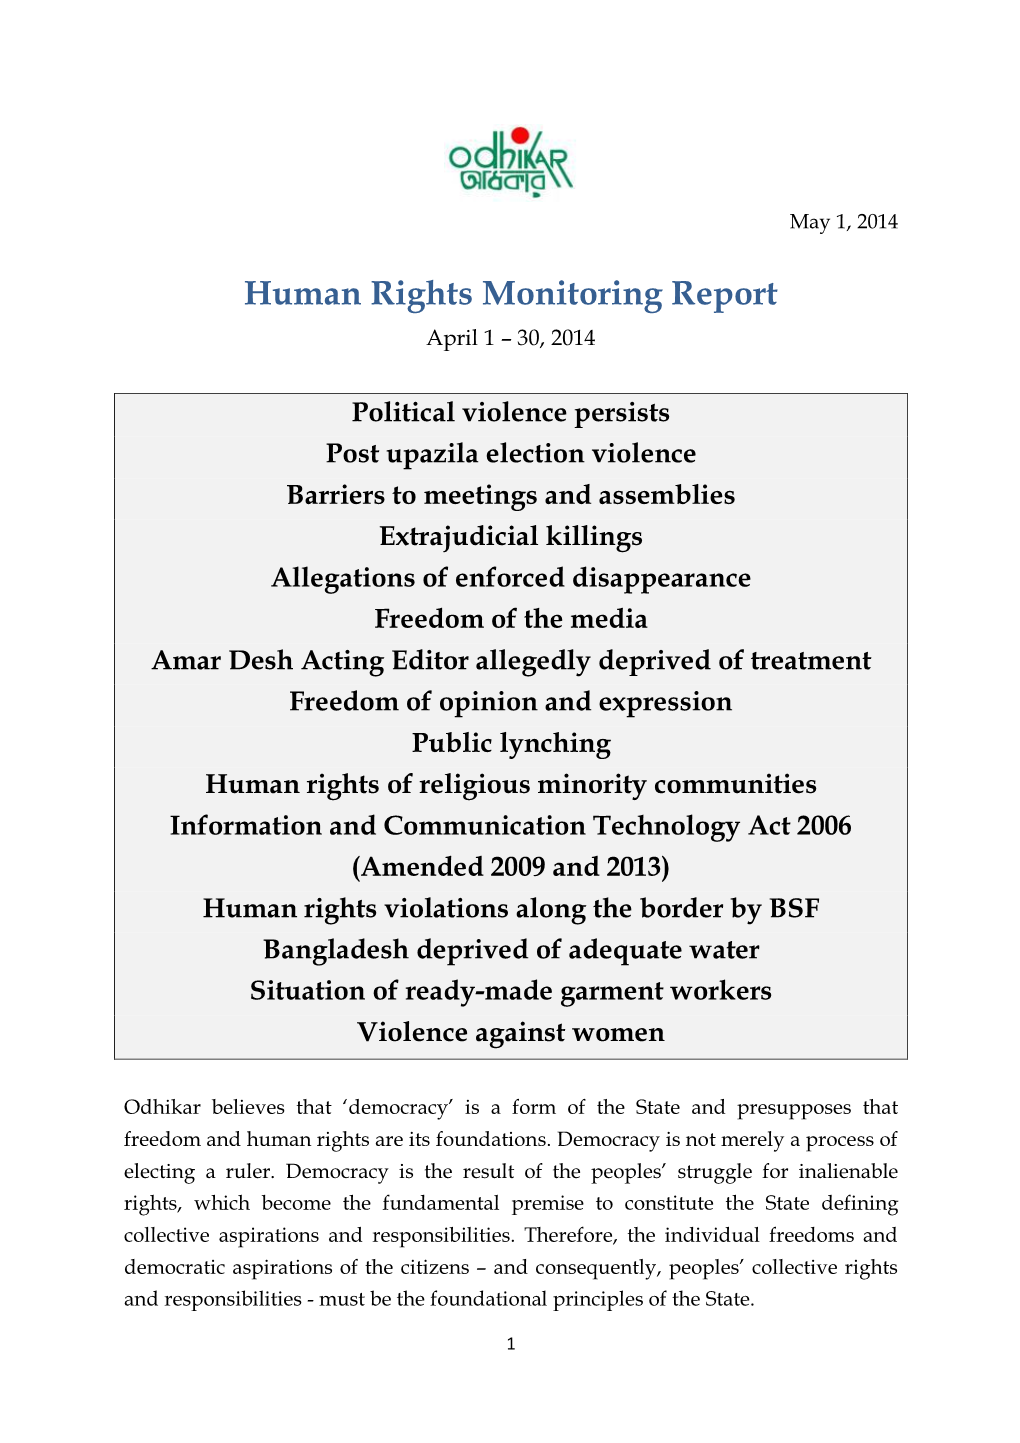 Human Rights Monitoring Report April 1 – 30, 2014